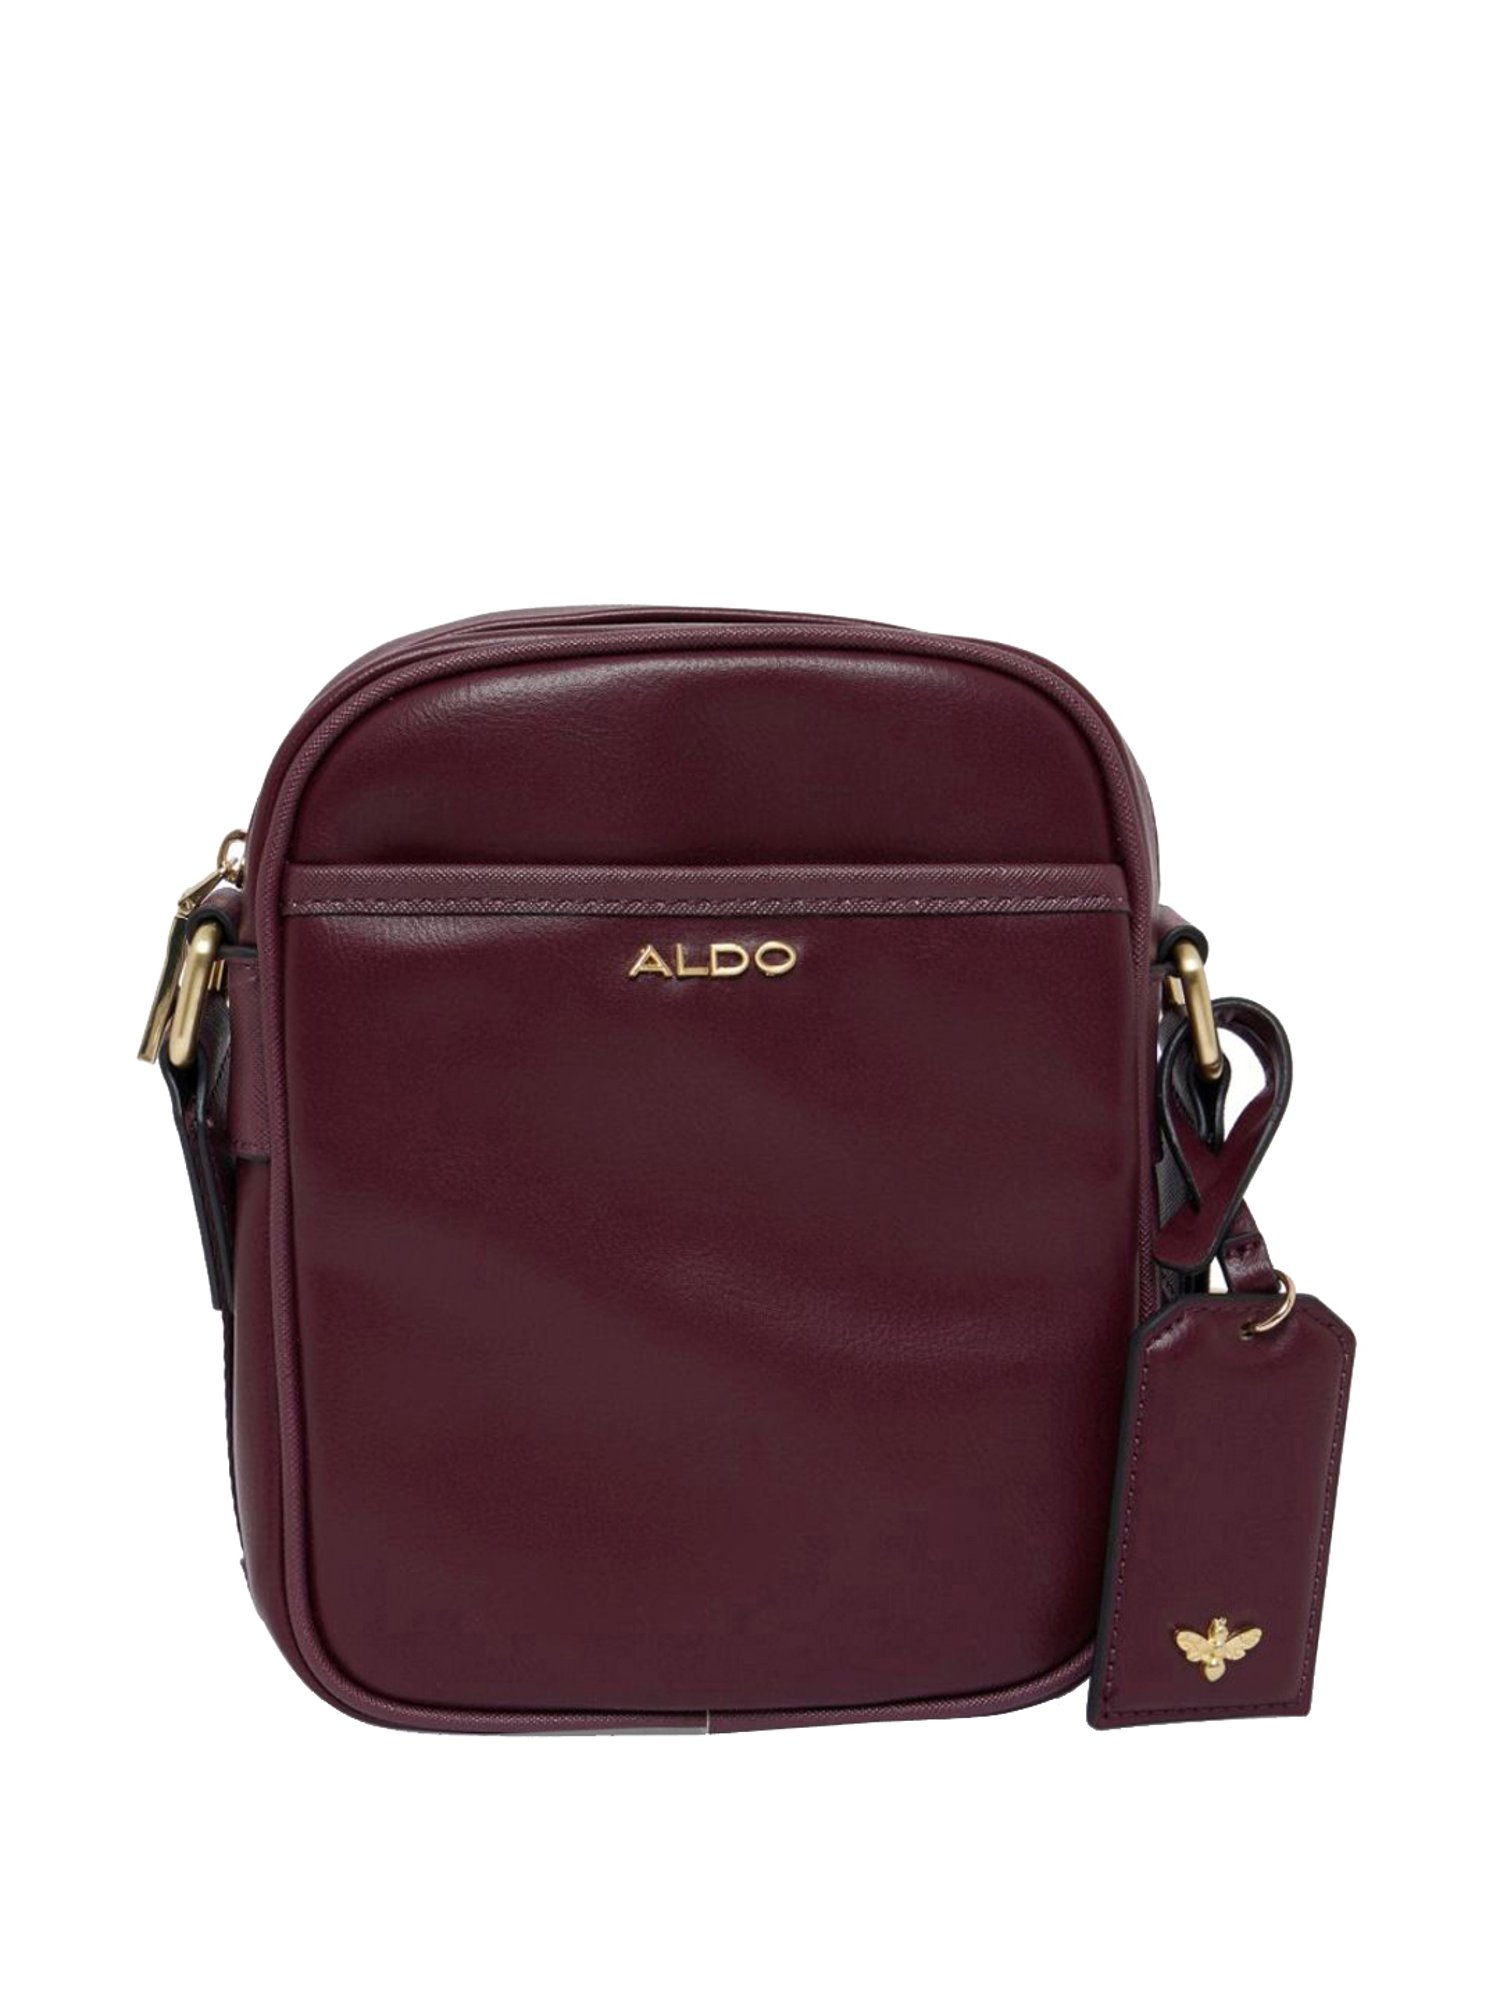 Aldo Purse Crossbody Handbag CAIILLAA Pink Floral Satin Bow Gold Buckle |  eBay